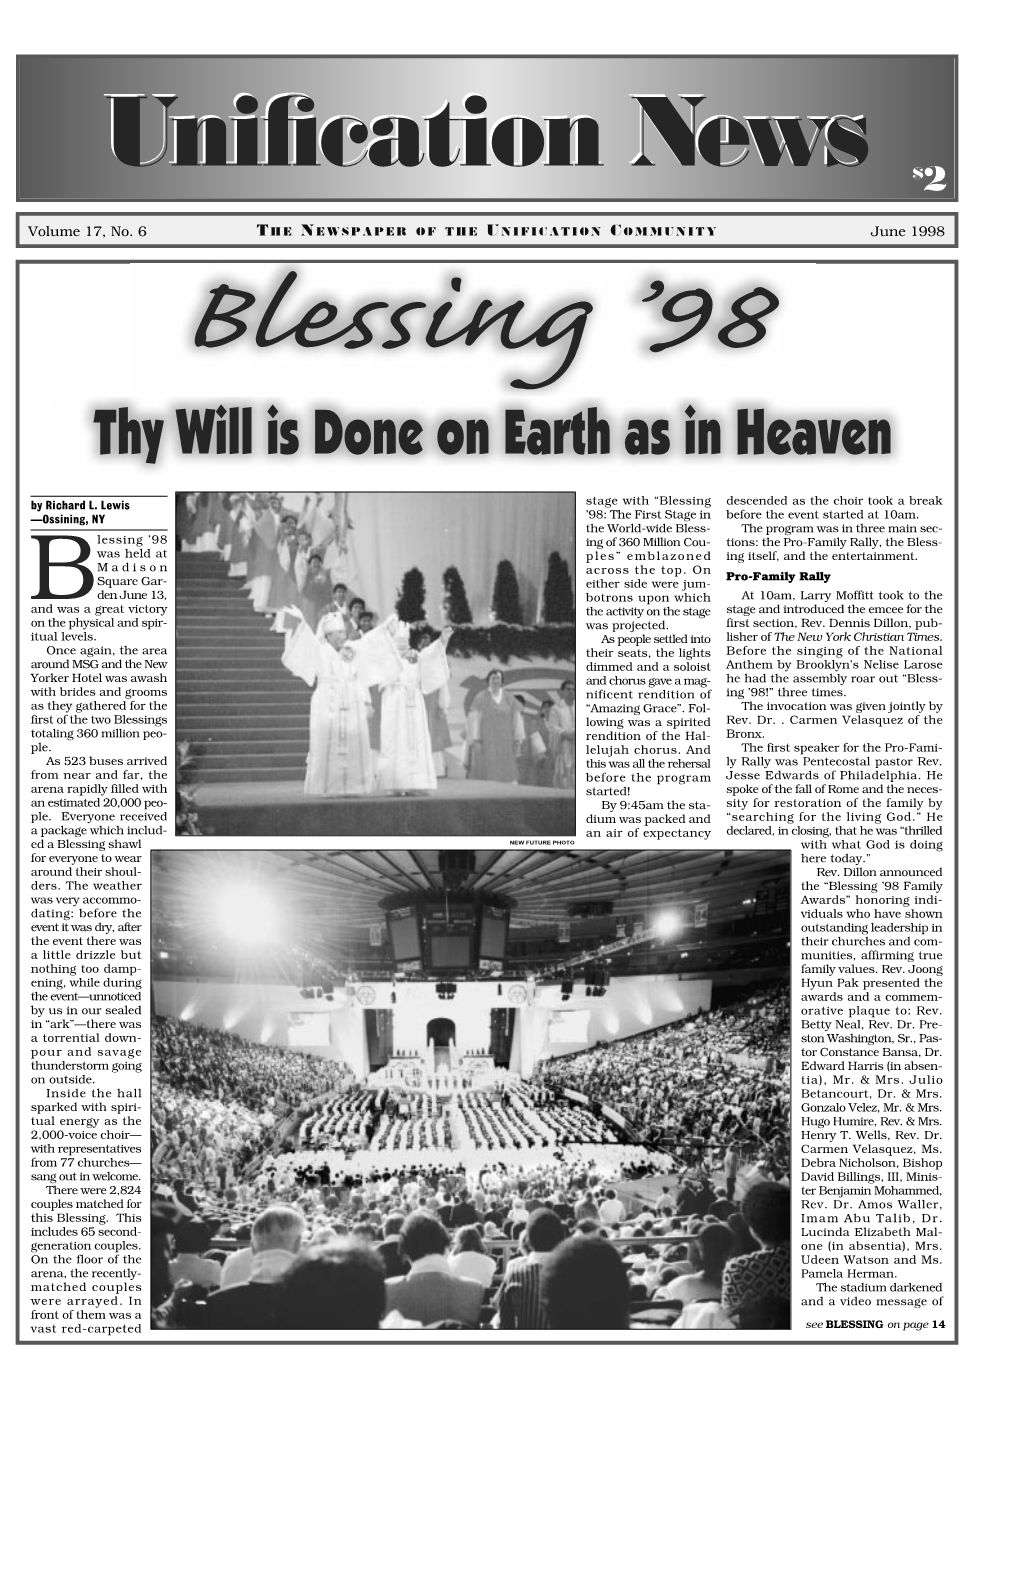 June 1998 Unification News